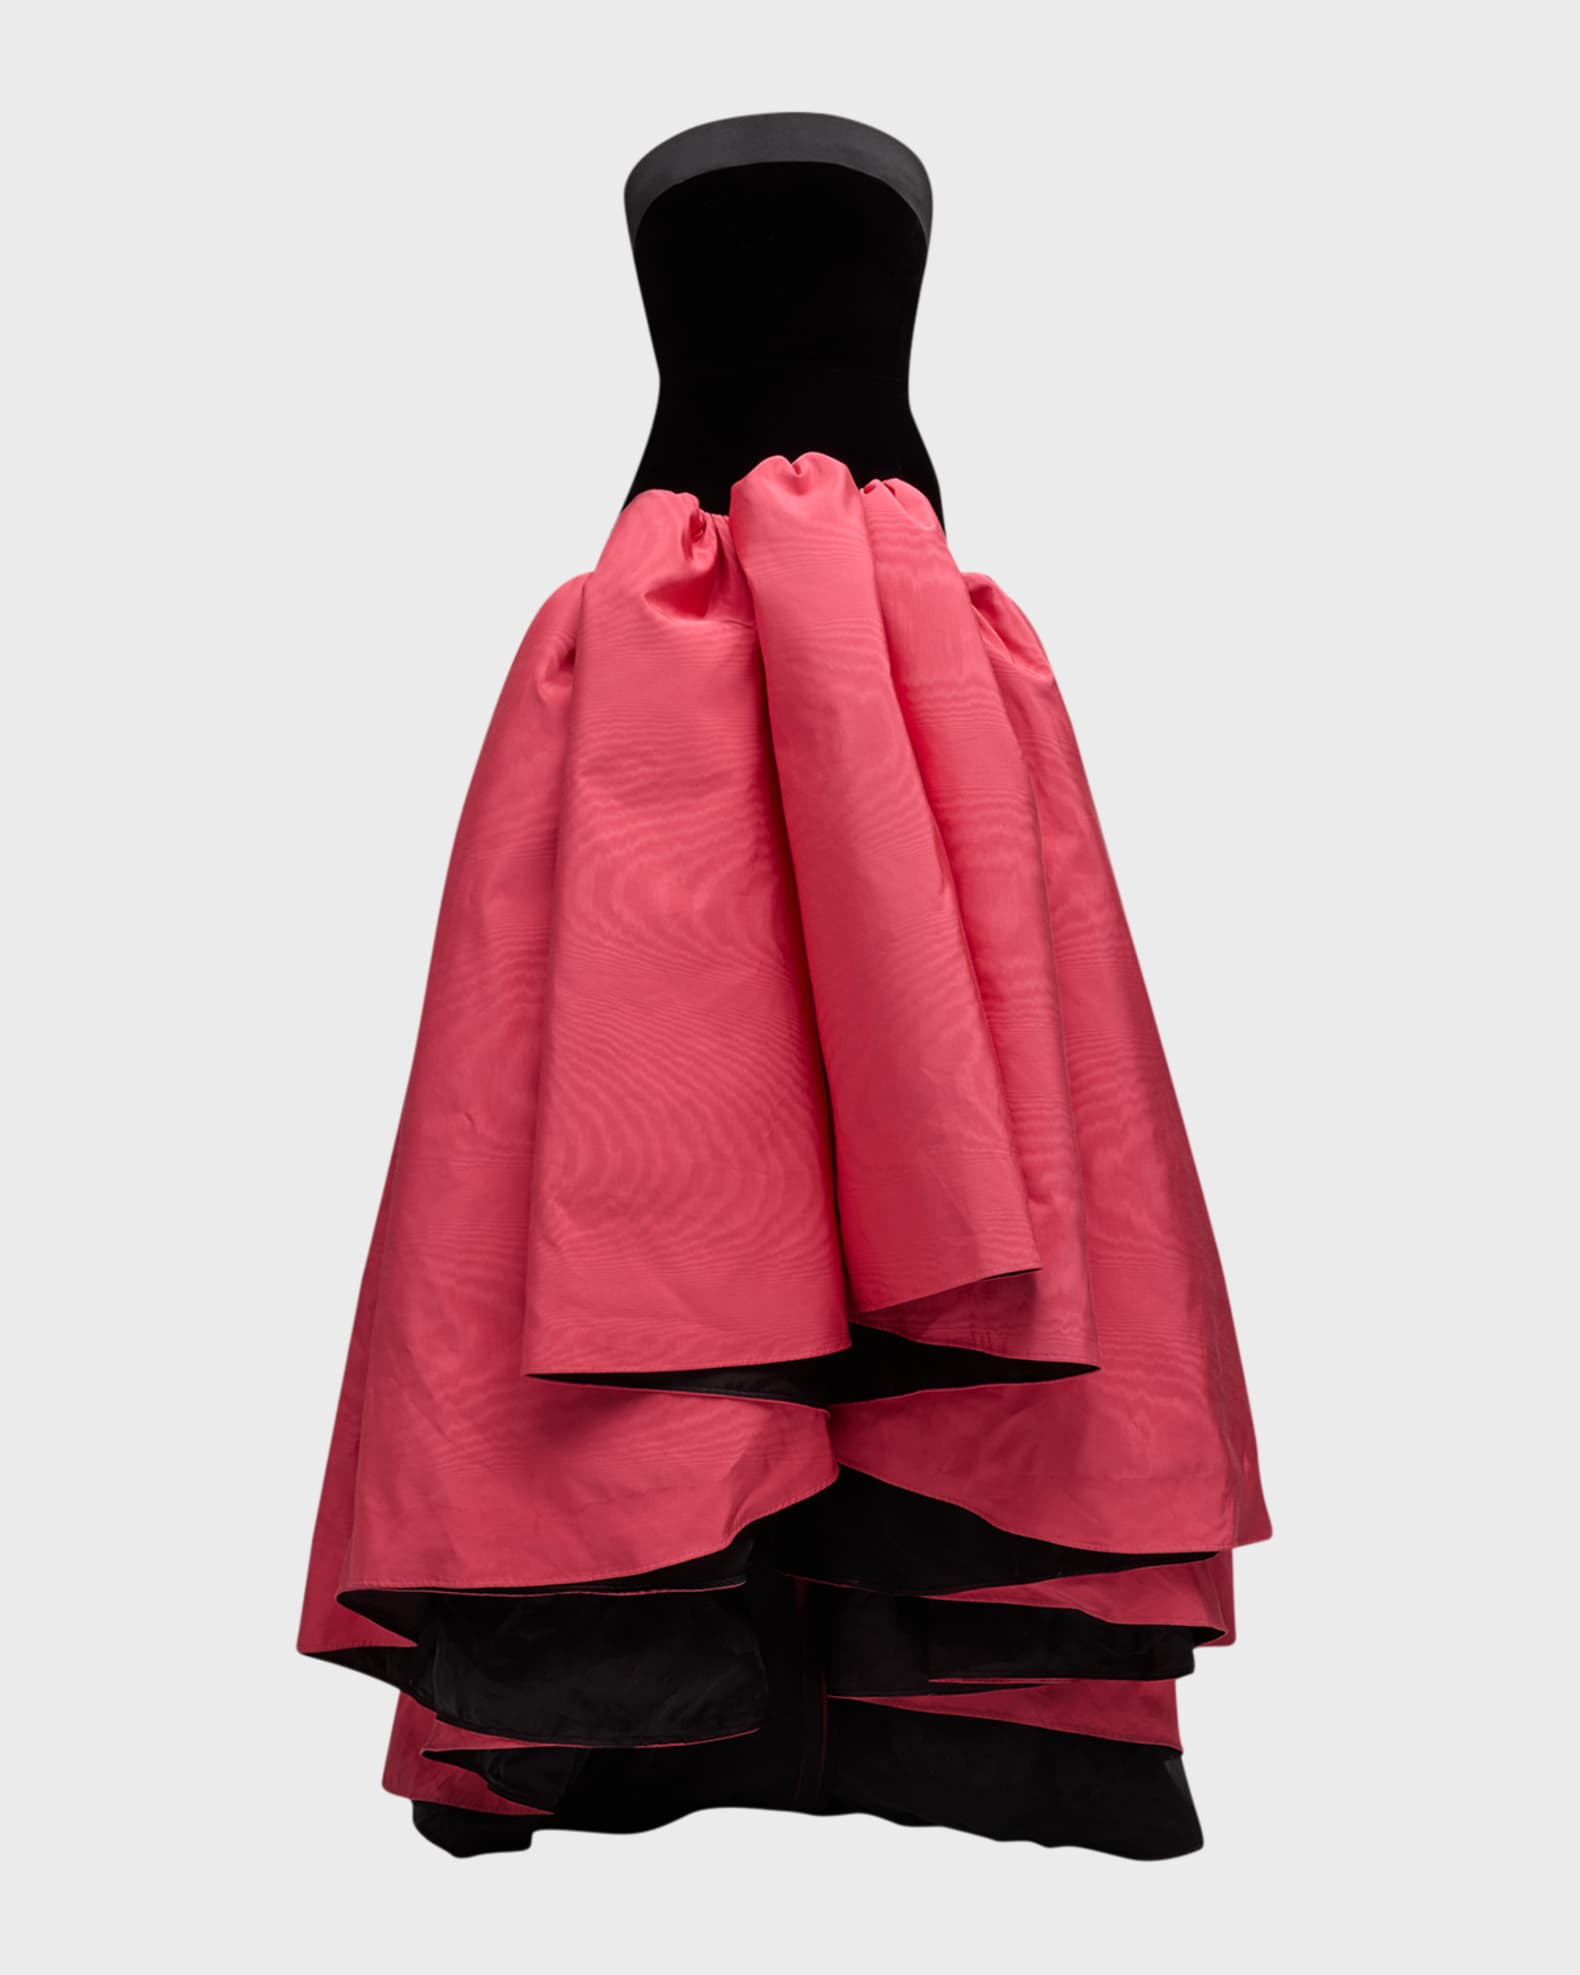 Bach Mai Sculptural Volant Drop-Waist Strapless Gown | Neiman Marcus